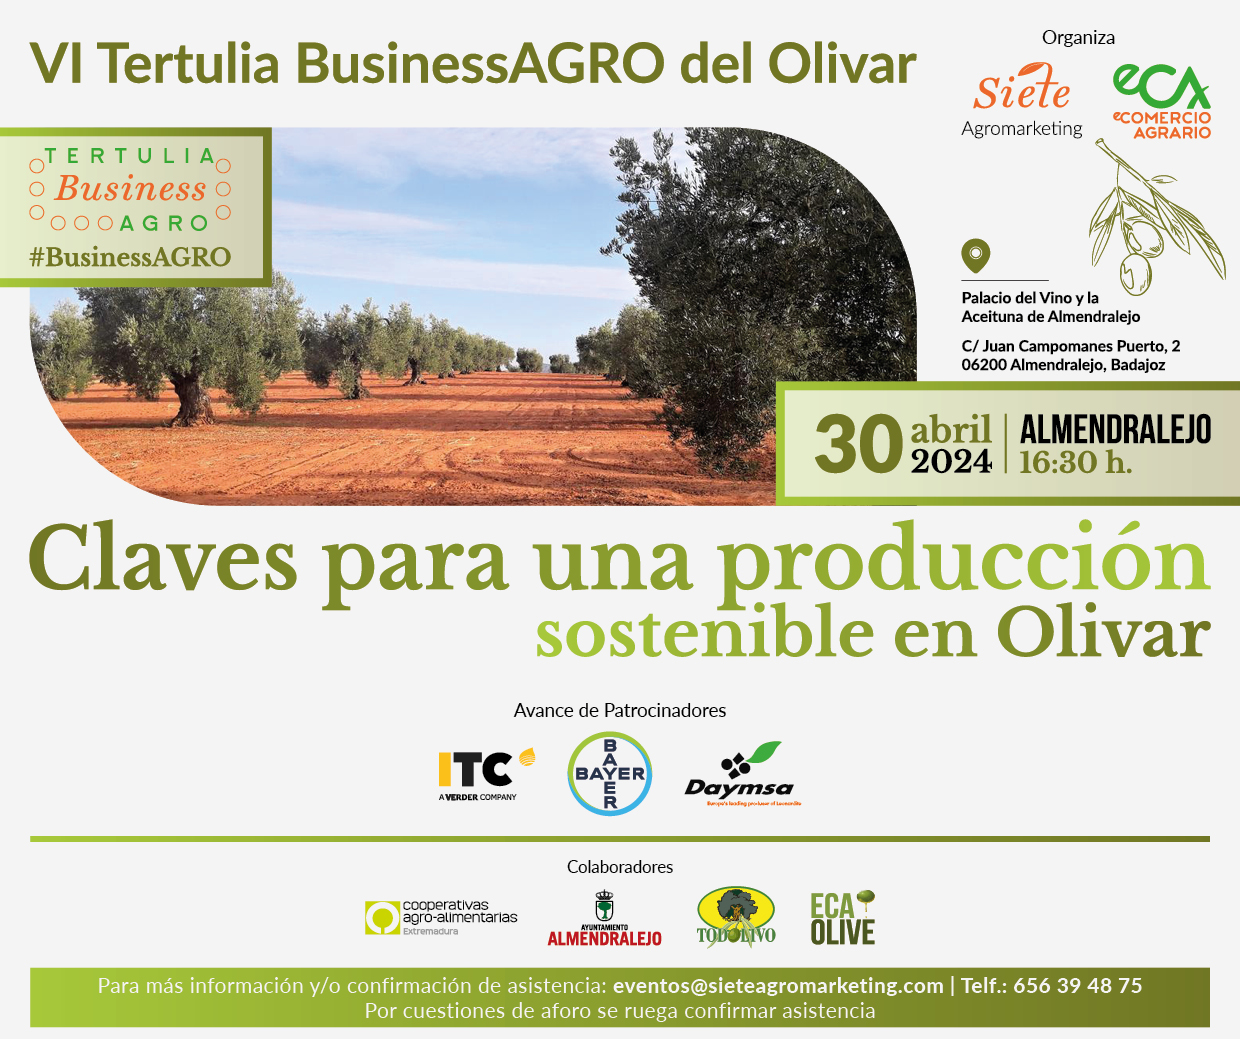 VI Tertulia BusinessAGRO del Olivar